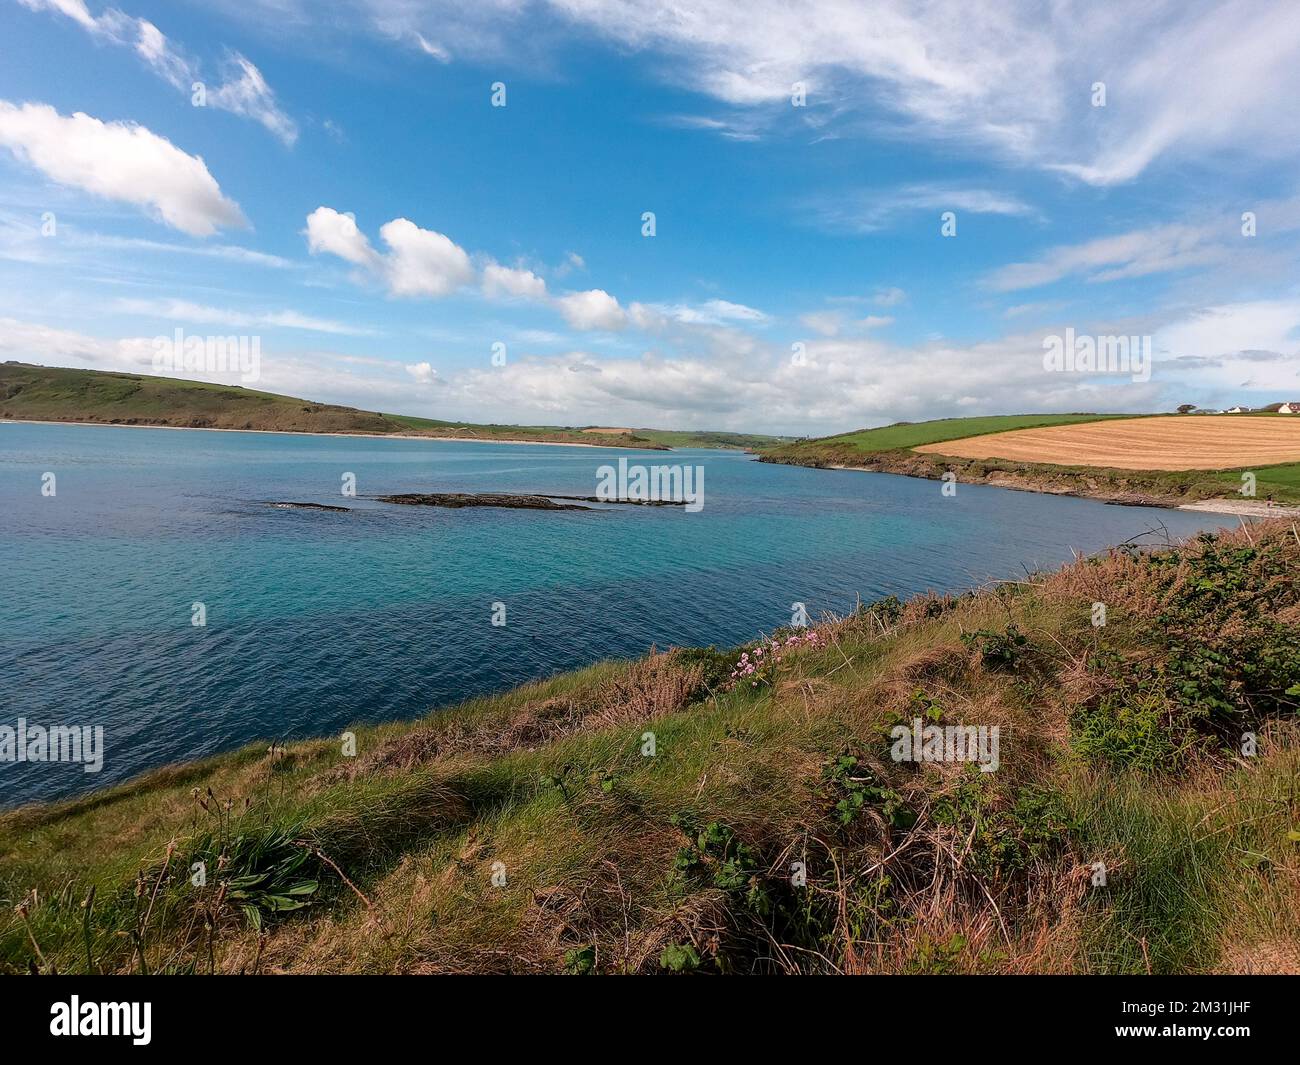 Celtic Sea Bay near Clonakilty, Ireland. Beautiful seascape. Blue sky with white clouds. Coastal nature. Stock Photo